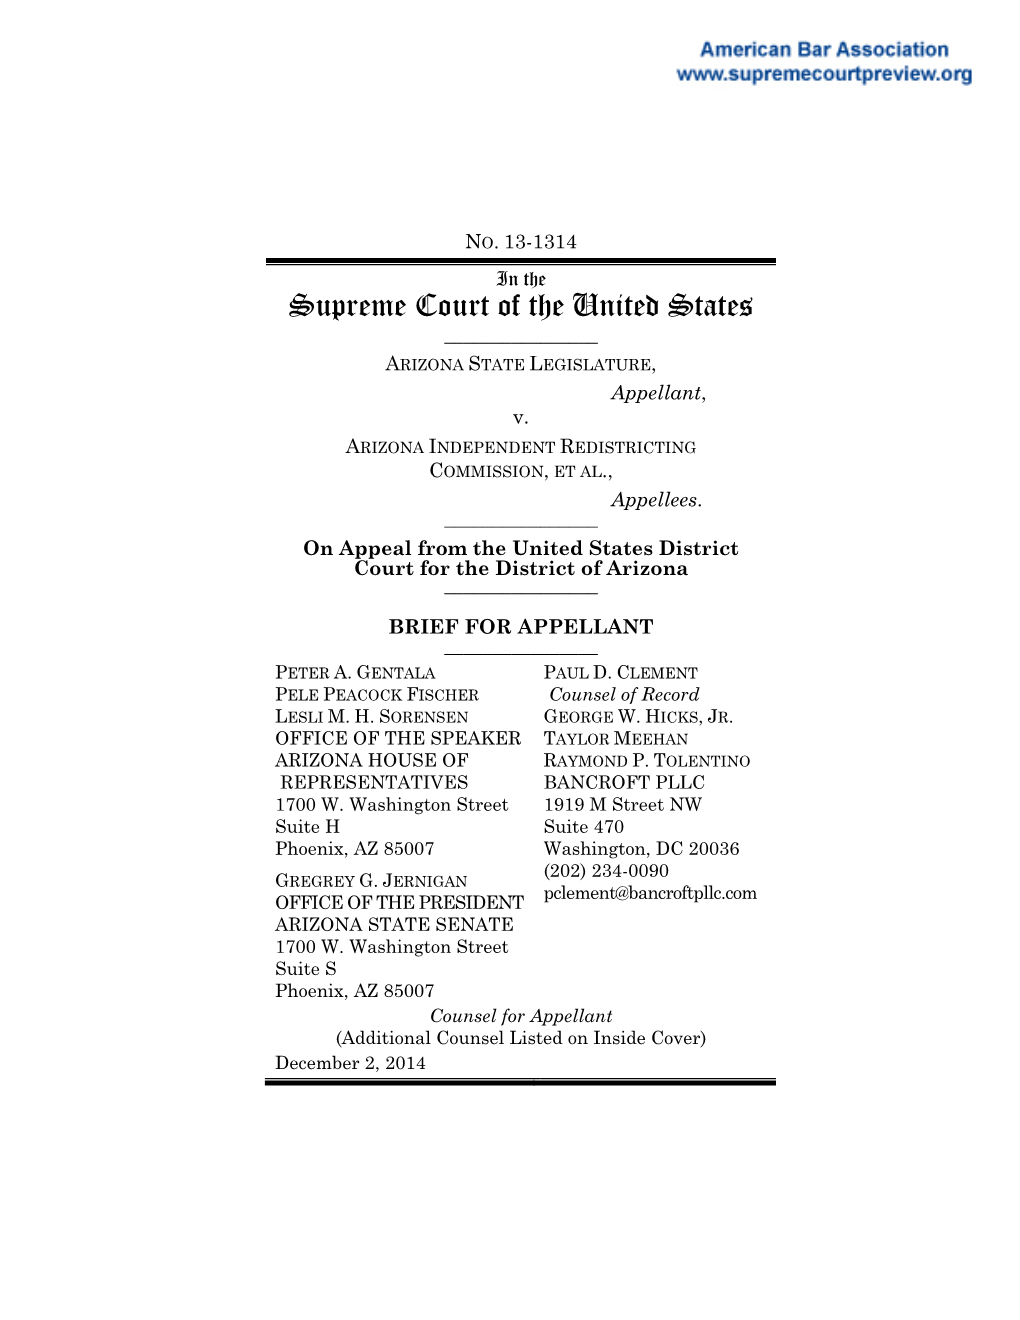 Brief for Appellant in Arizona State Legislature V. Arizona Independent Redistricting Commission